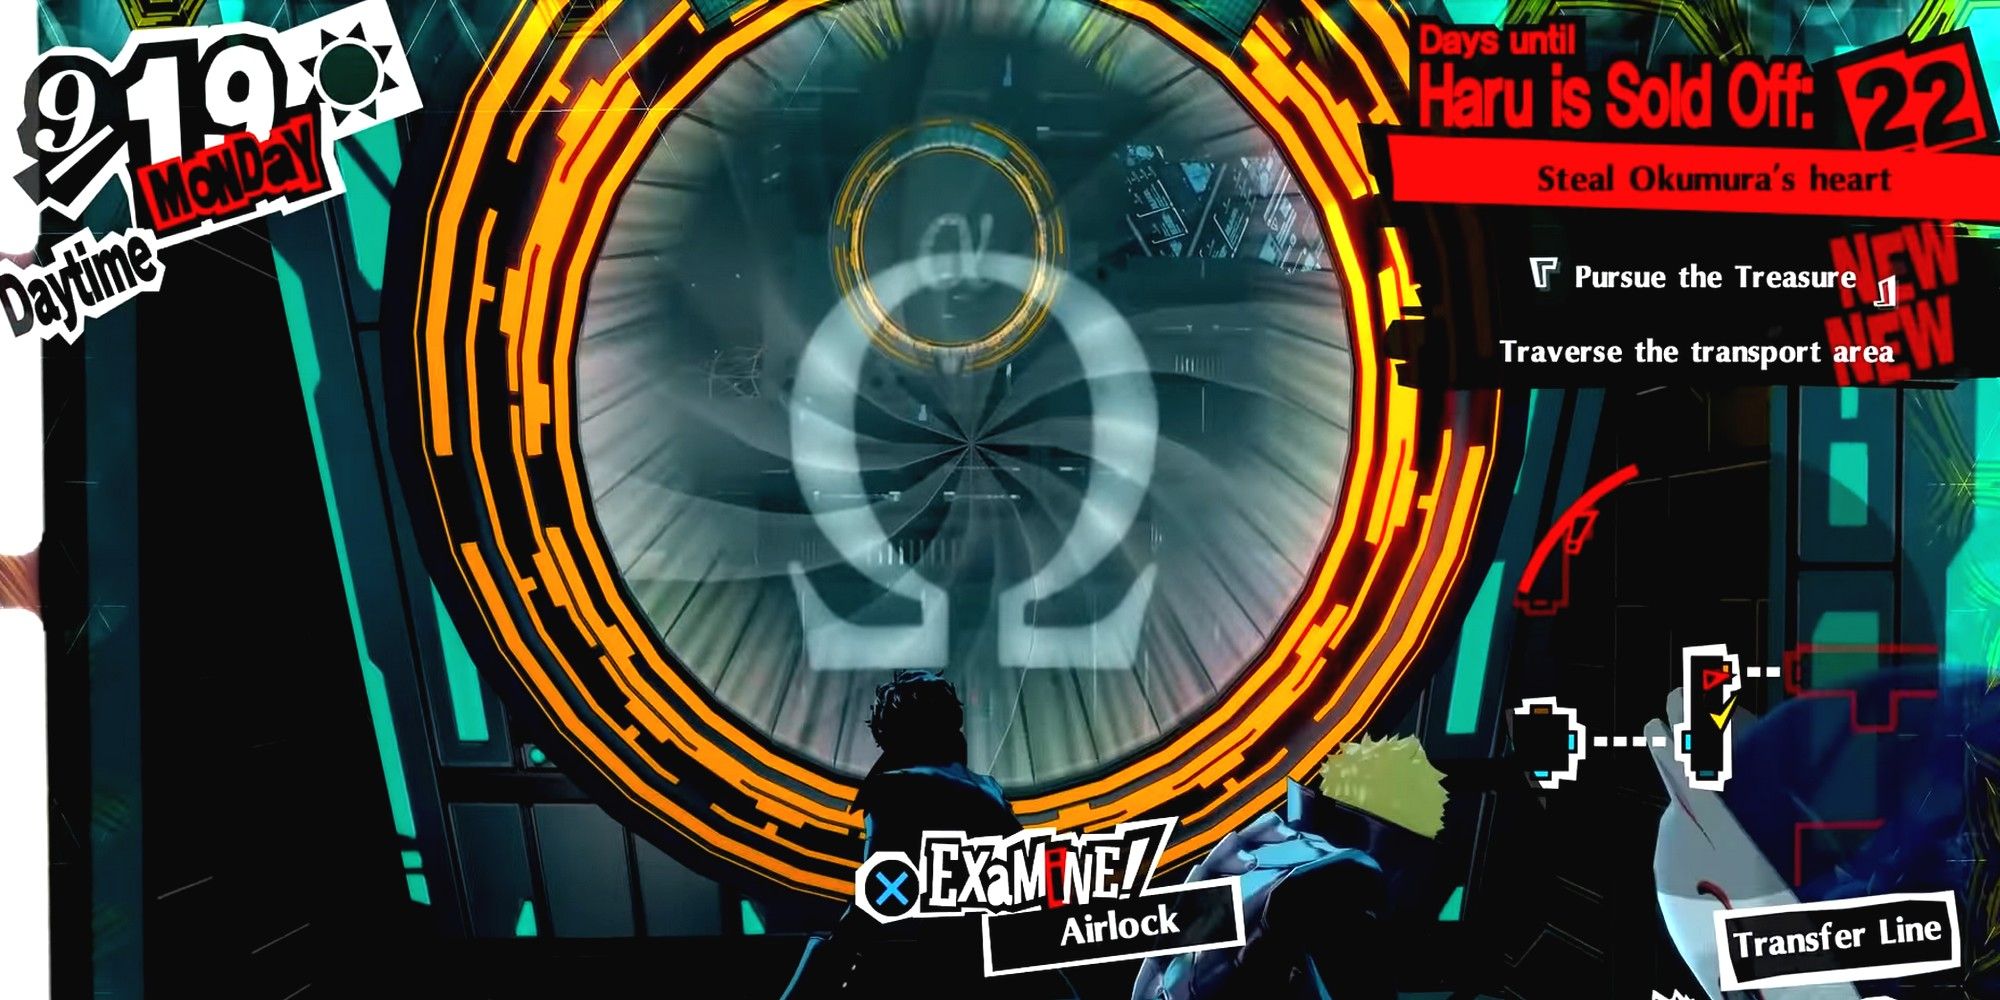 joker in front of an omega airlock in okumura's spaceport